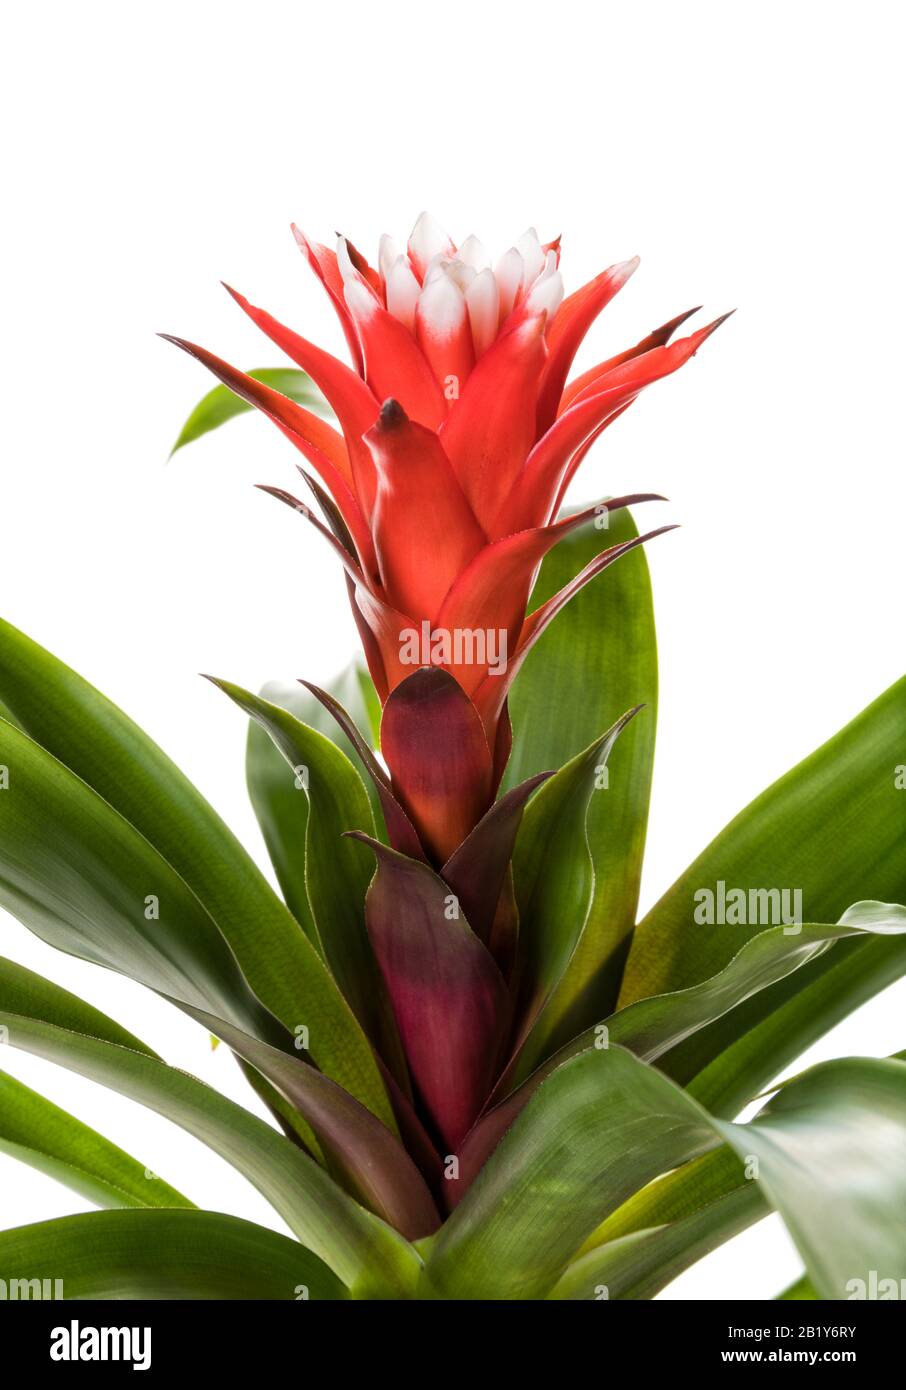 Red Guzmania Bromeliad inflorescence closeup isolated on white background Stock Photo